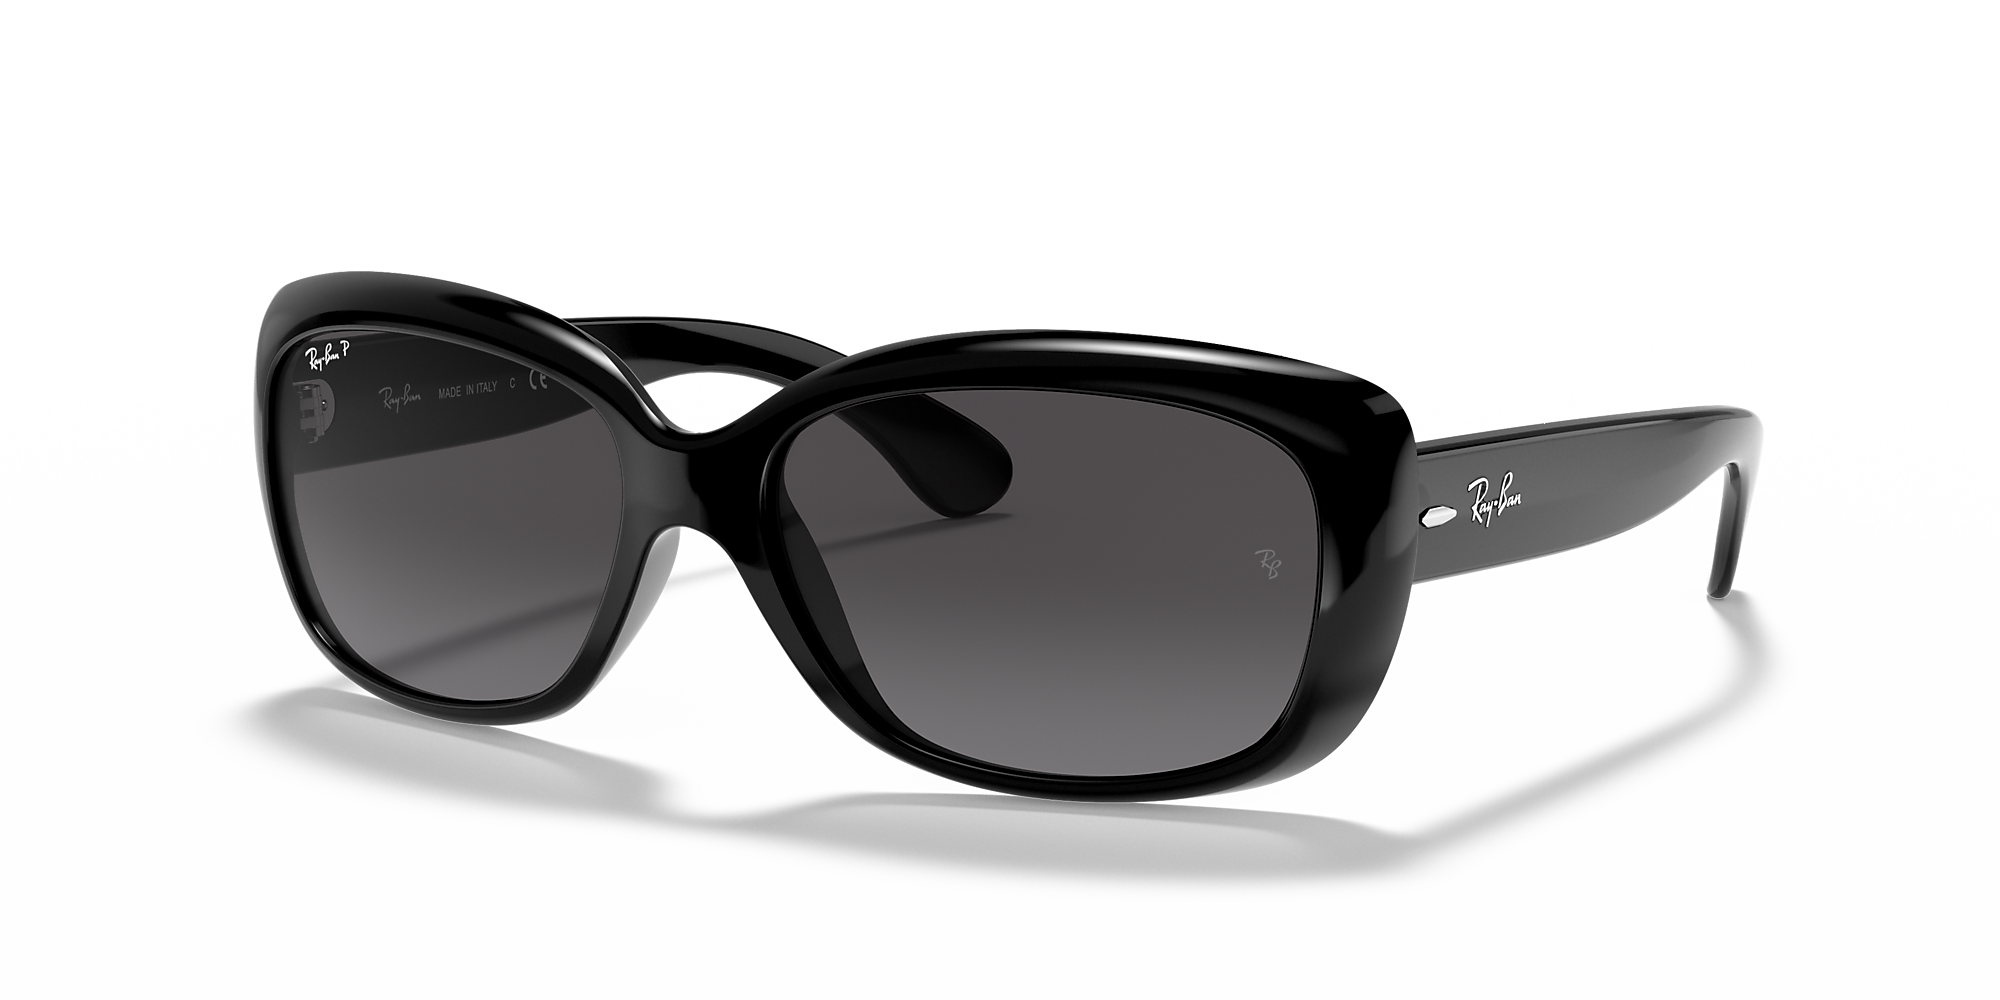 Ray Ban Rb4101 Jackie Ohh 58 Grey And Black Polarized Sunglasses Sunglass Hut Usa